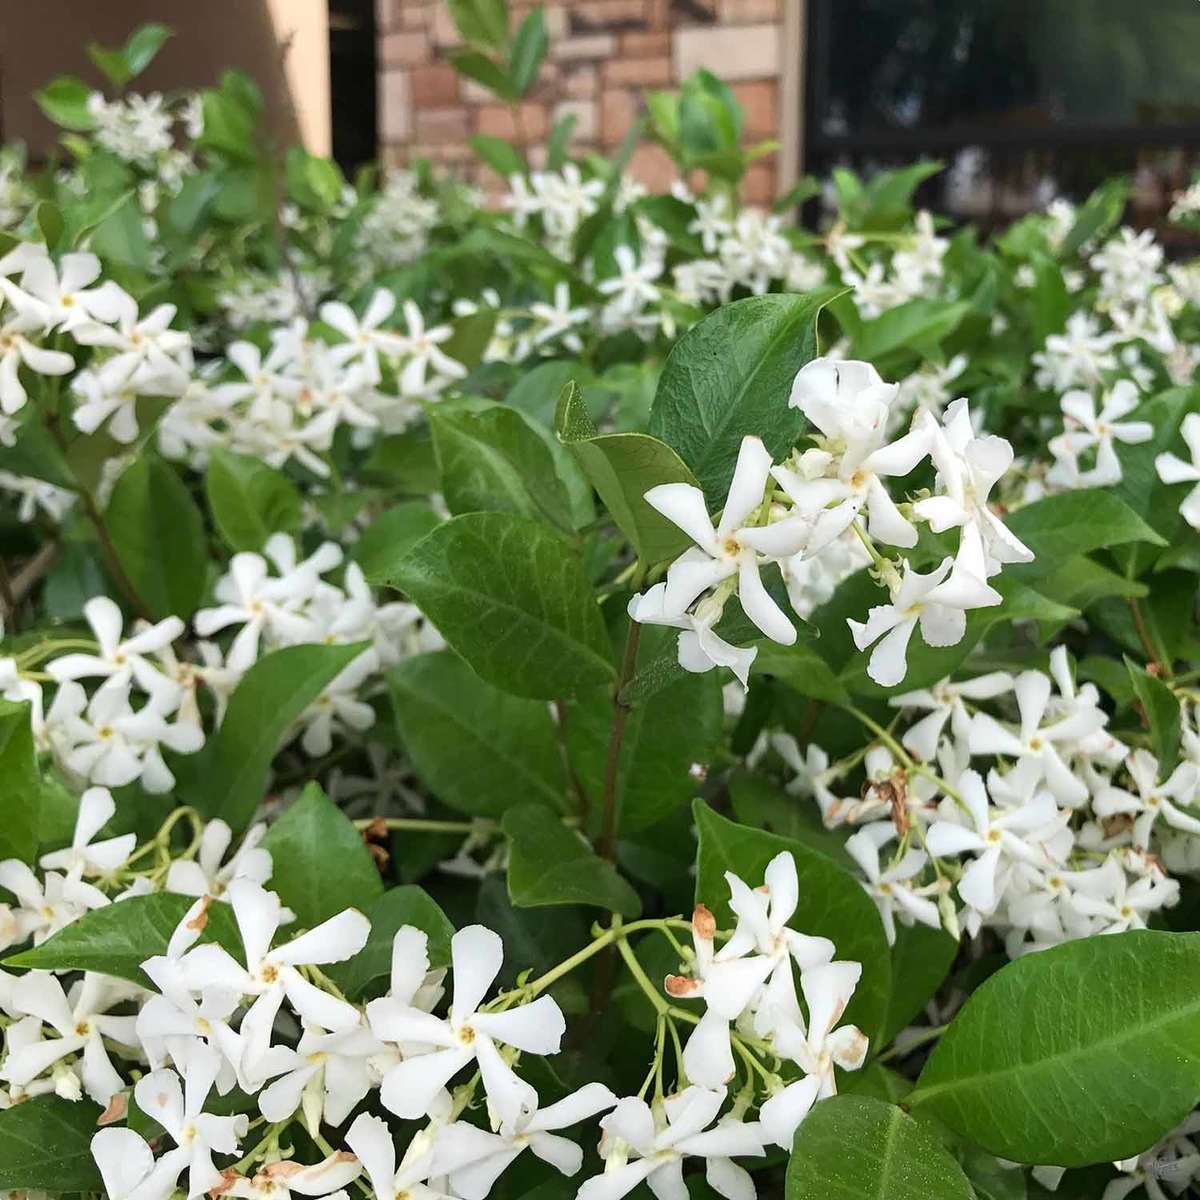 Star Jasmine with white blooms